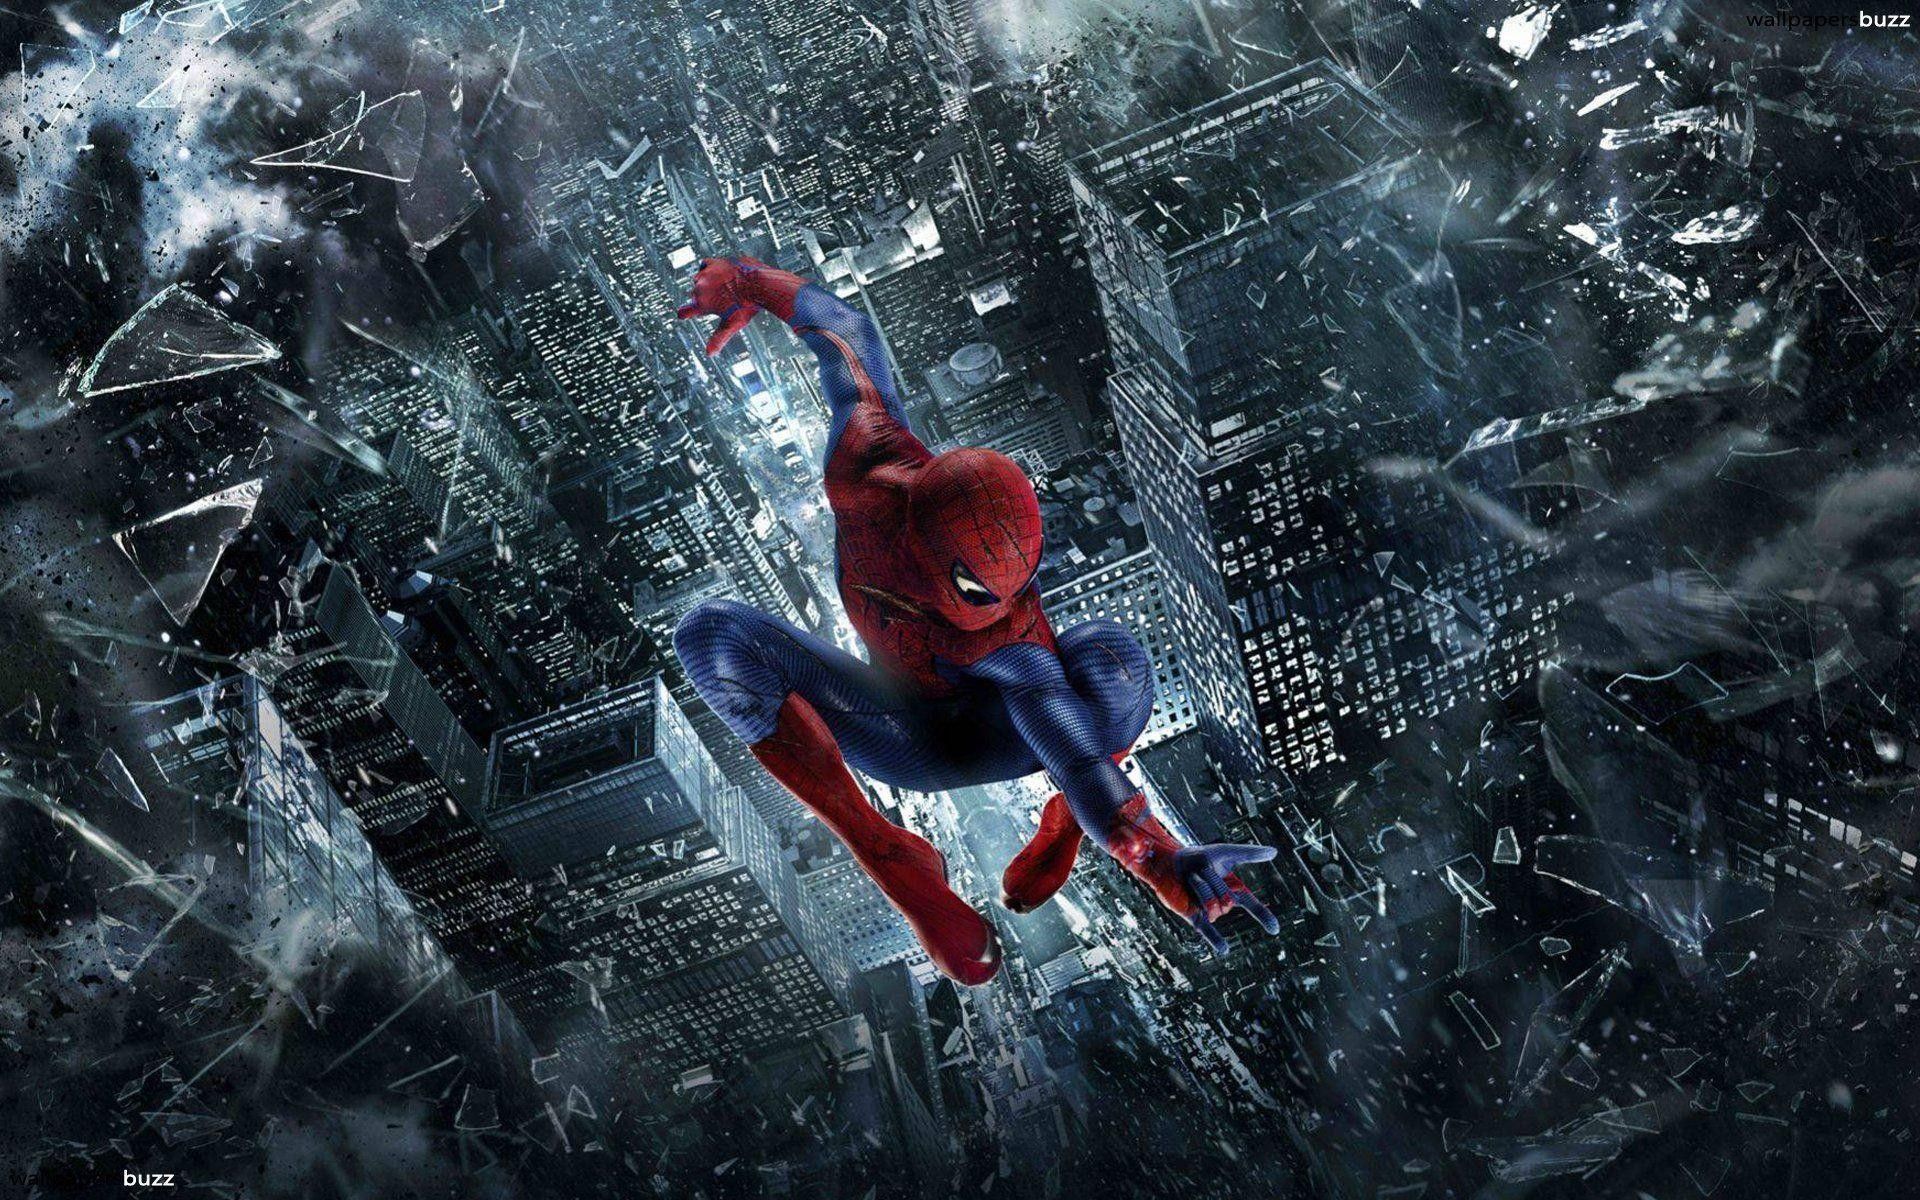 New Spiderman Wallpaper HD For Desktop Full Screen. Man Wallpaper, Spider Man Wallpaper, Superhero Wallpaper